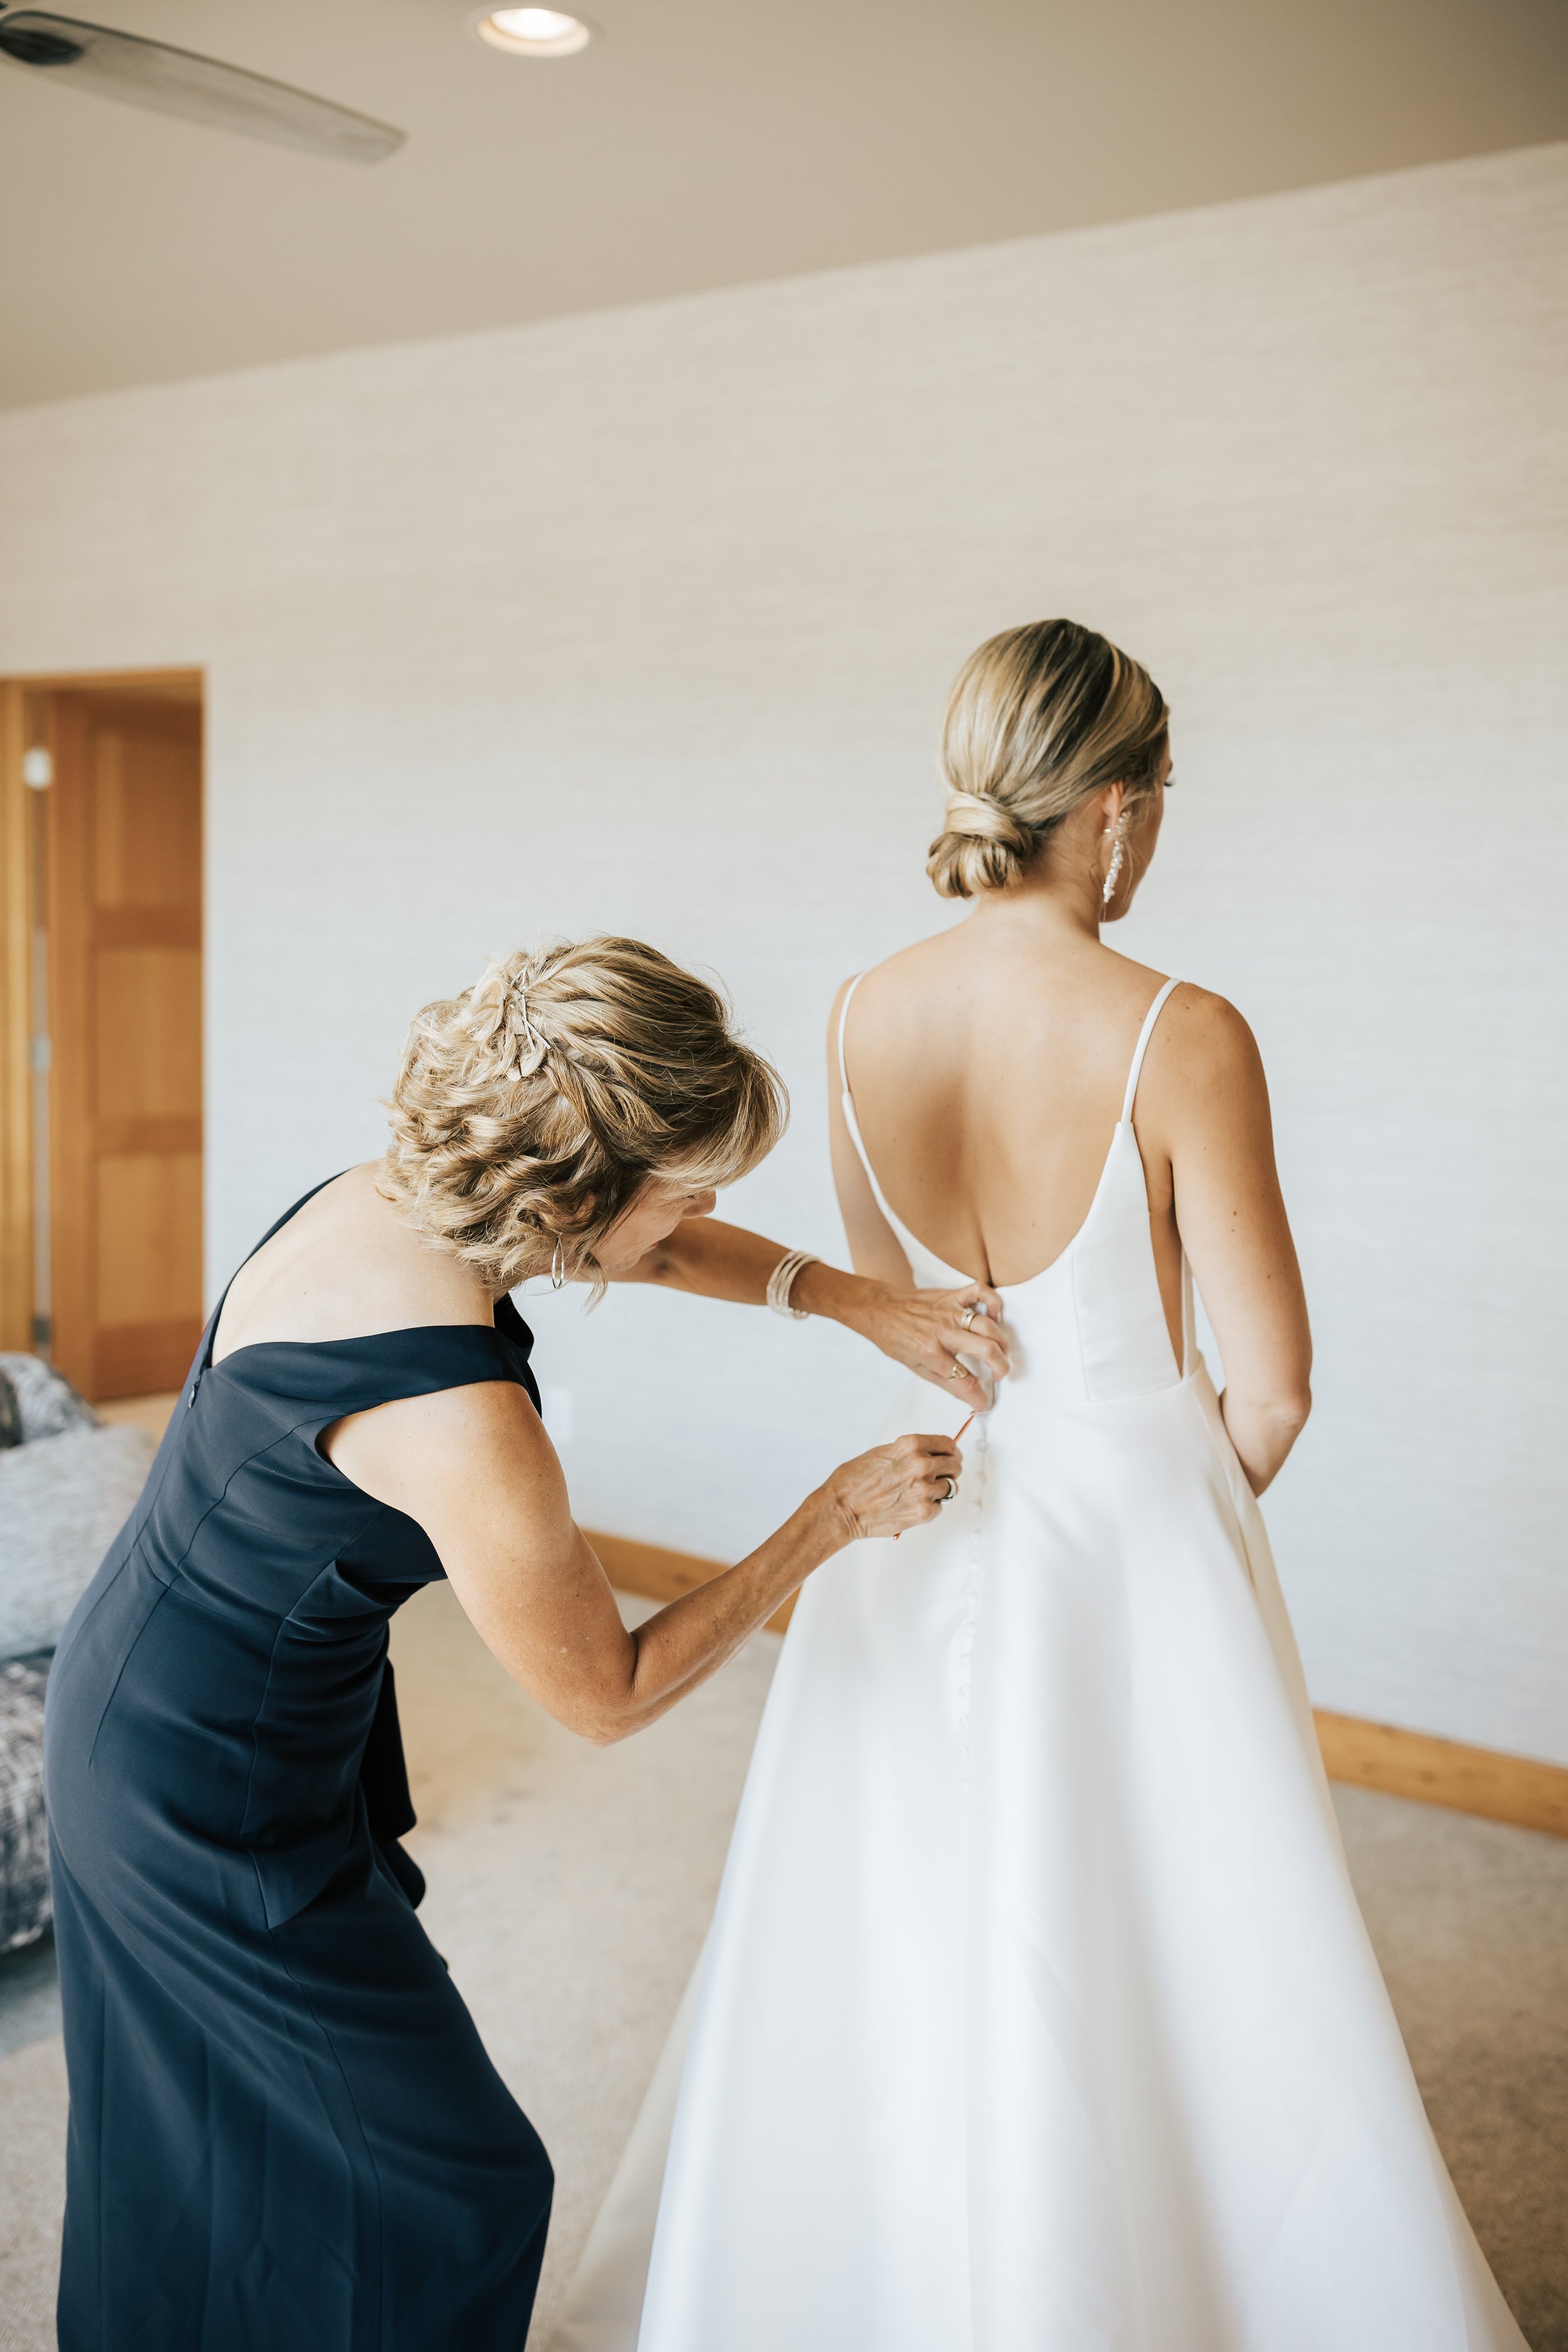  Getting ready photos. Bride’s mom helps her button up wedding dress in hotel room. #montanawedding #utahwedding #gettingreadyphotos 